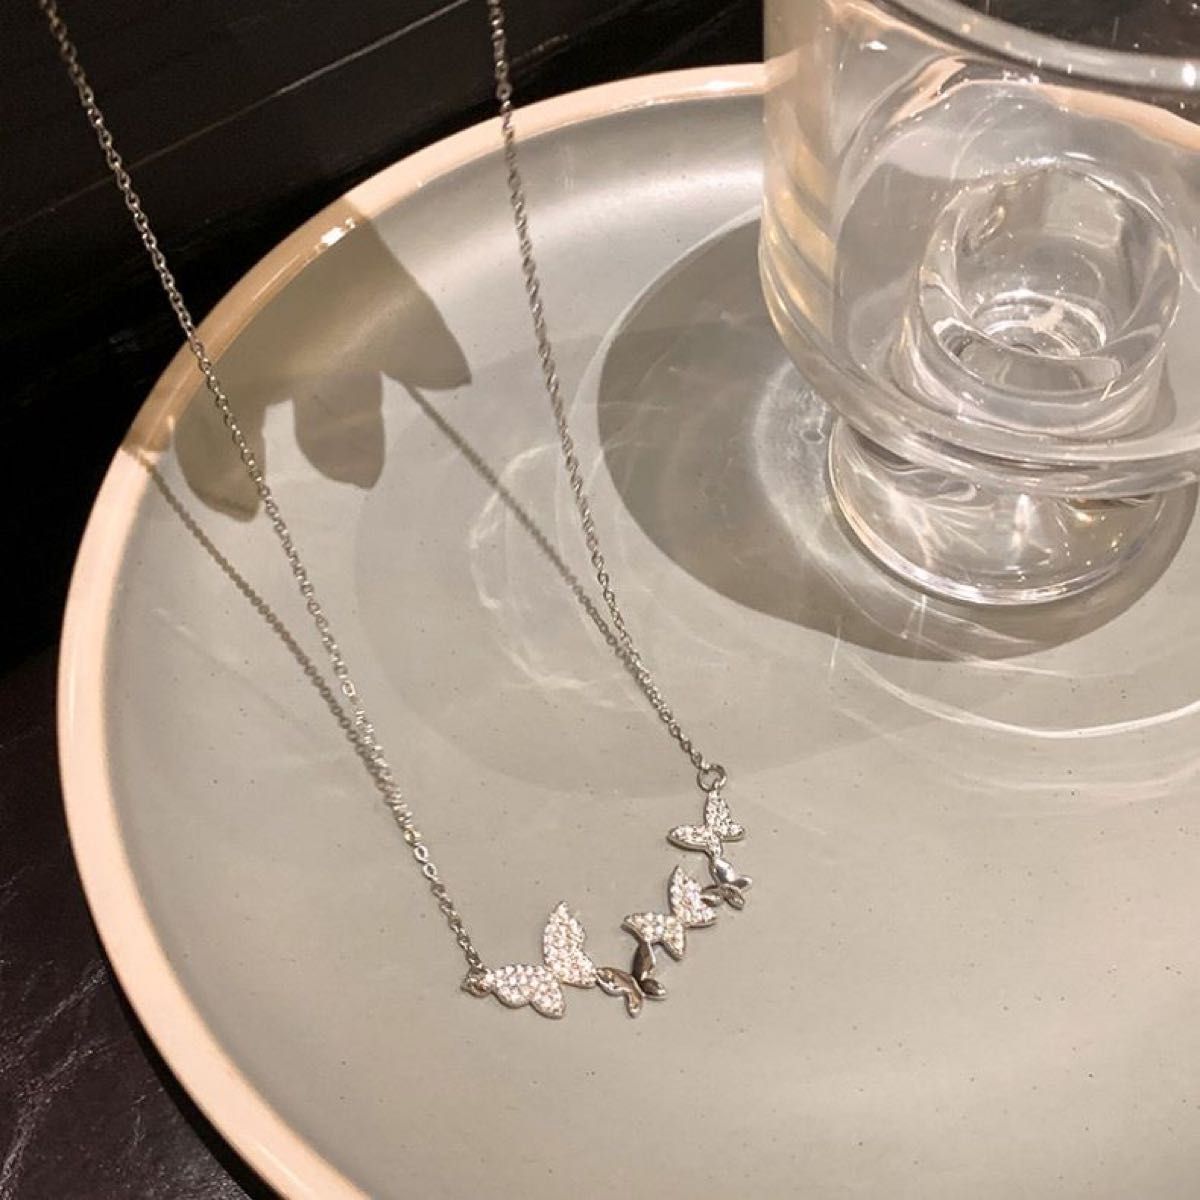 Mamey Jewelry 蝶のネックレス、チタン鋼、シンプルで精巧な鎖骨チェーン、ins、高級感、ニッチなデザインアクセサリー